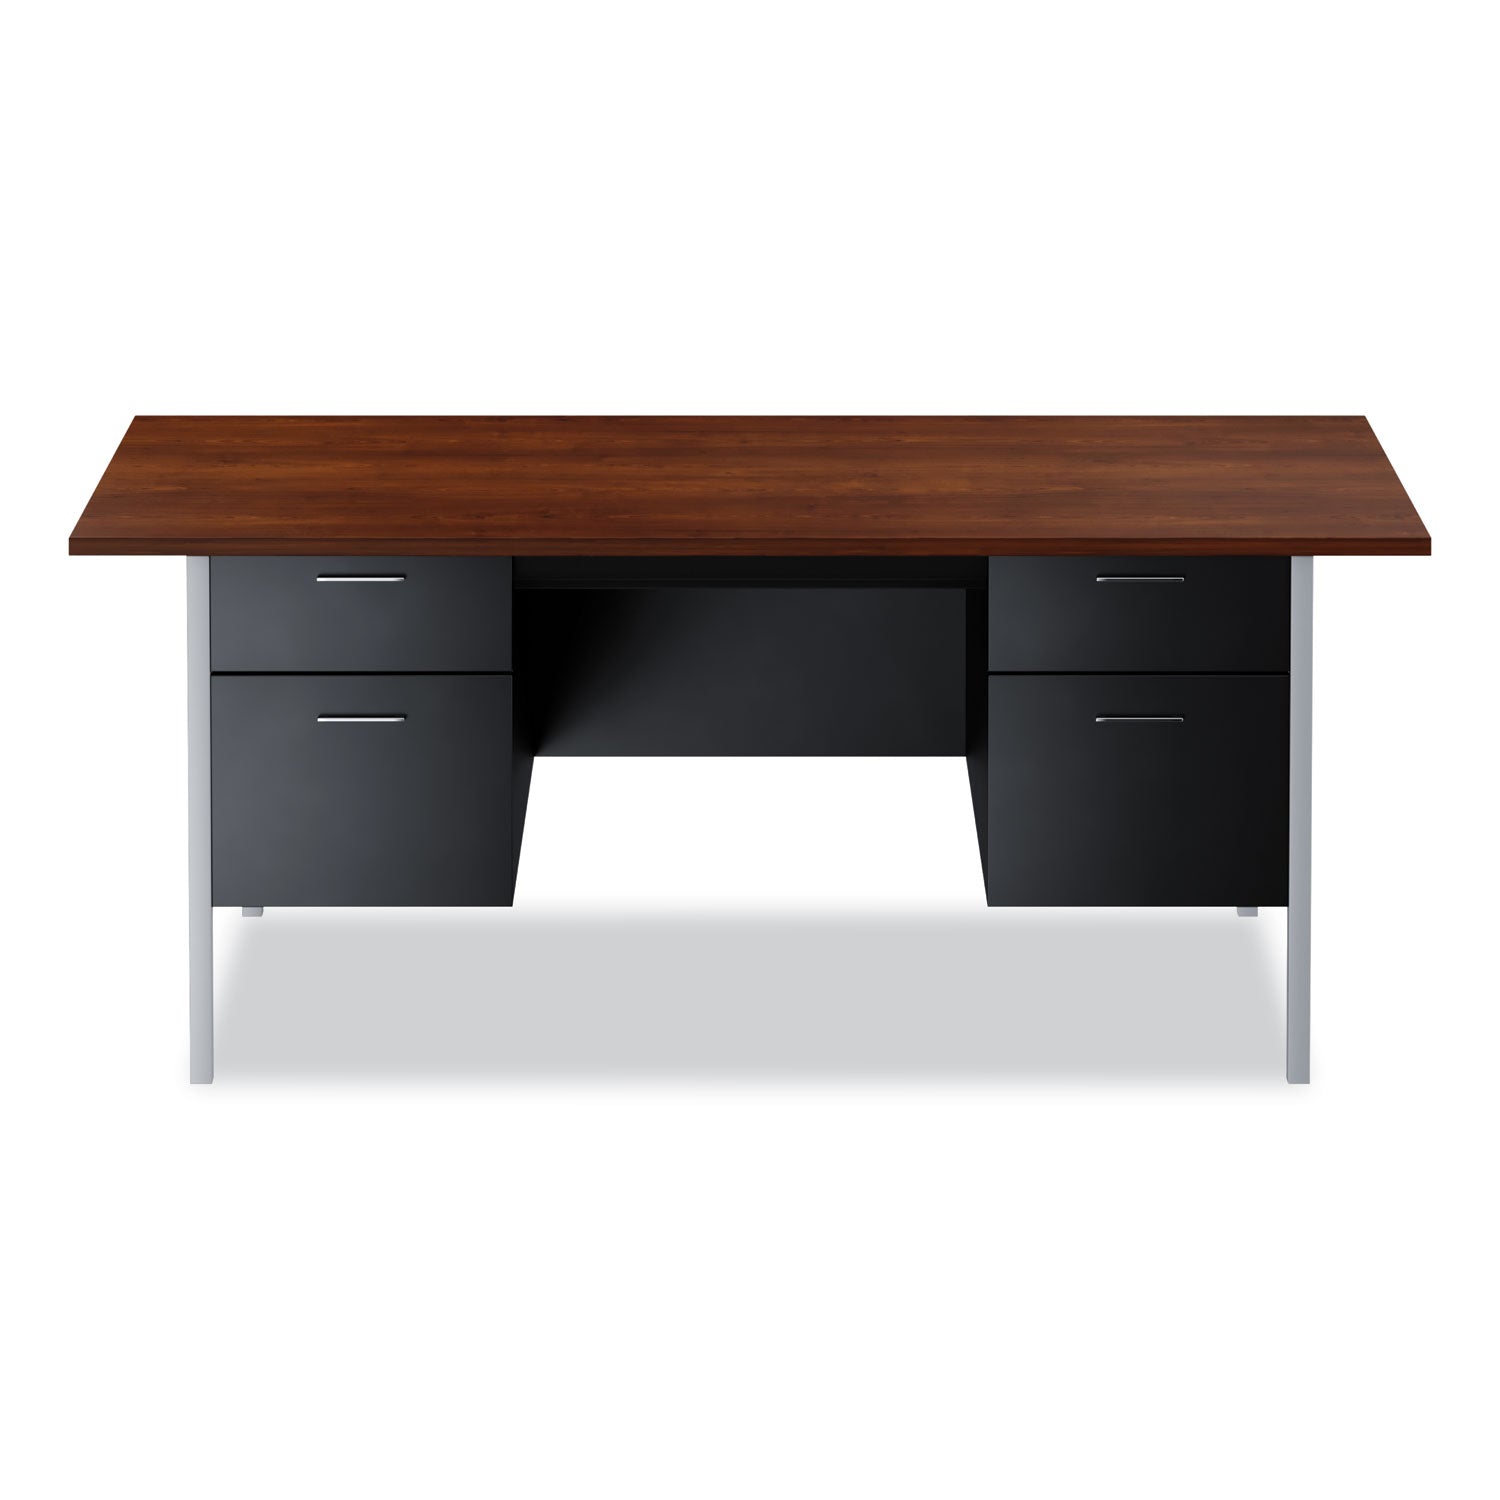 double-pedestal-steel-desk-72-x-36-x-295-mocha-black-chrome-plated-legs_alesd7236bm - 1